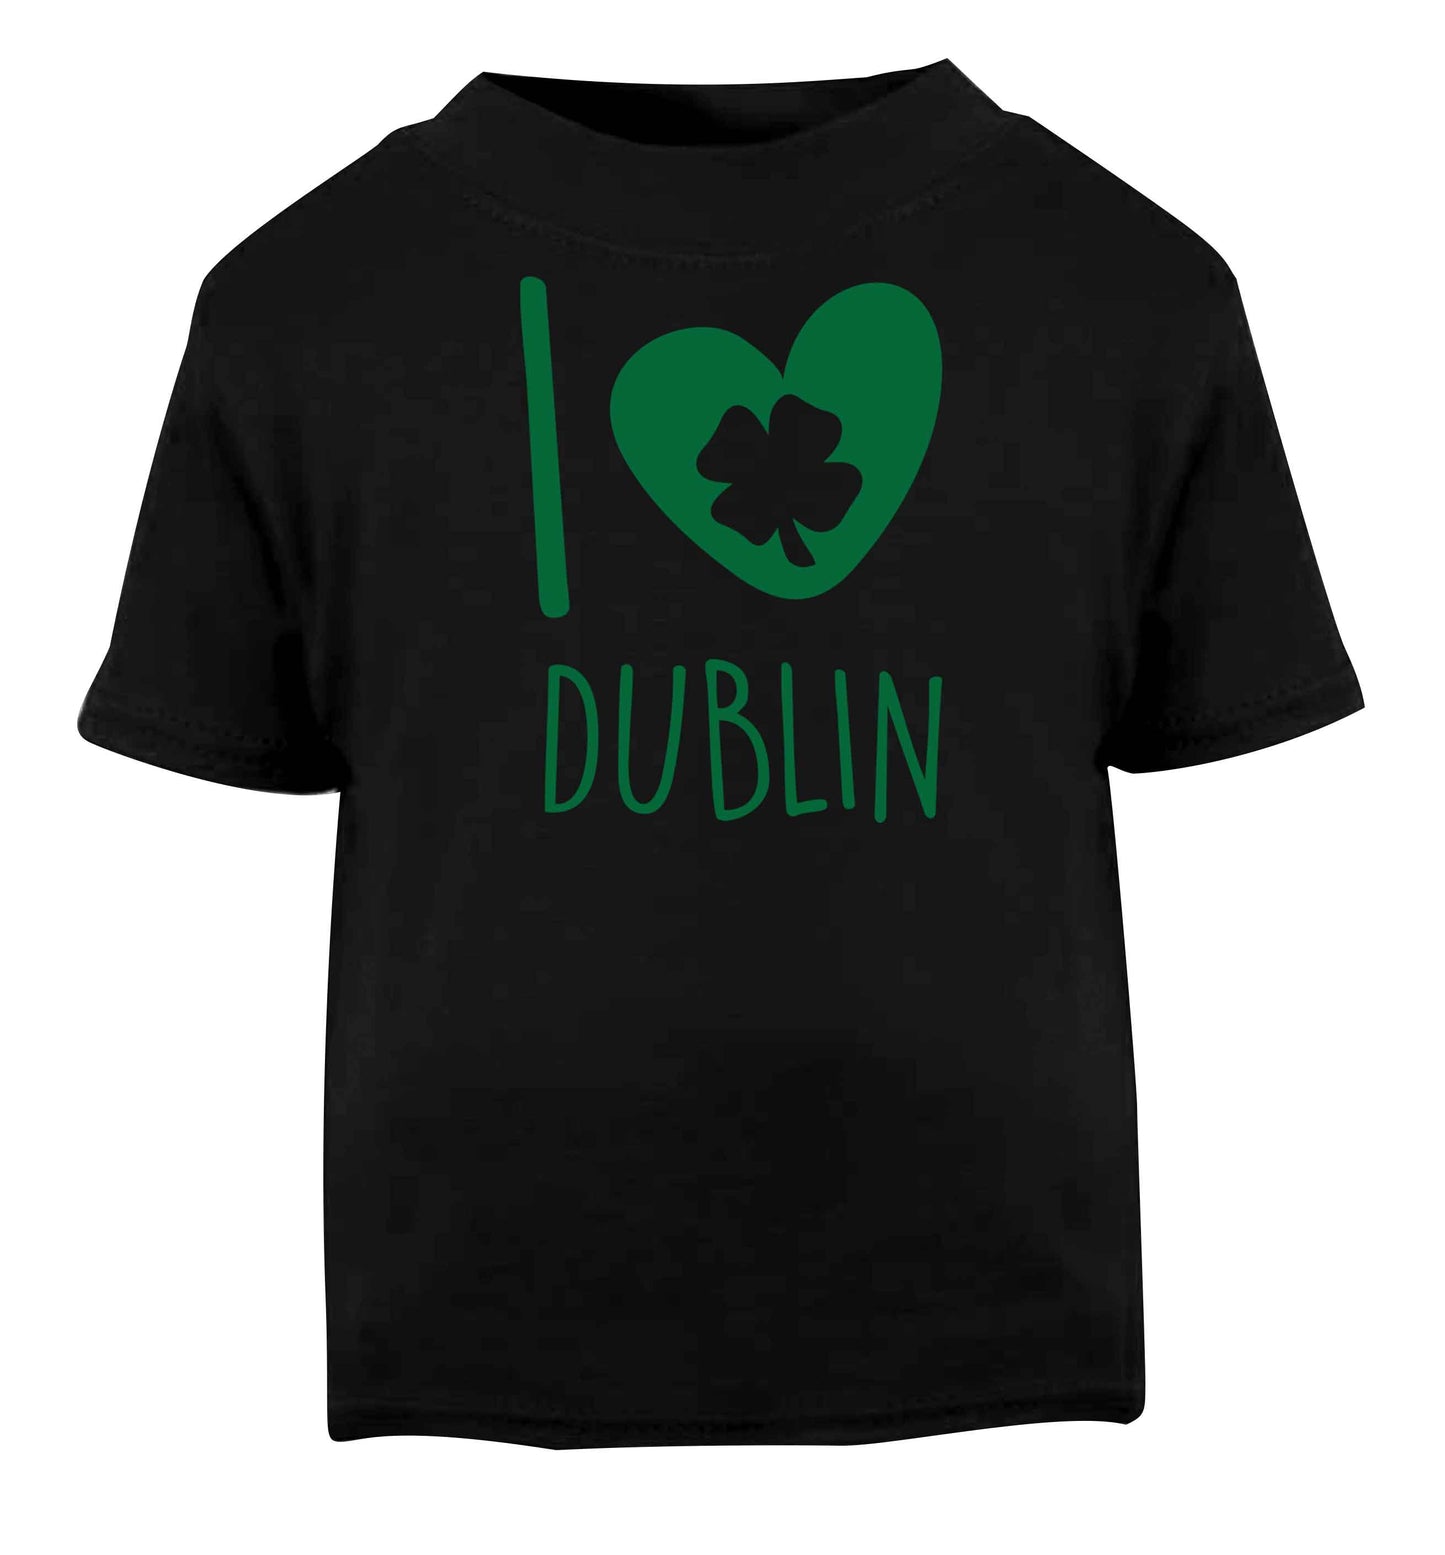 I love Dublin Black baby toddler Tshirt 2 years